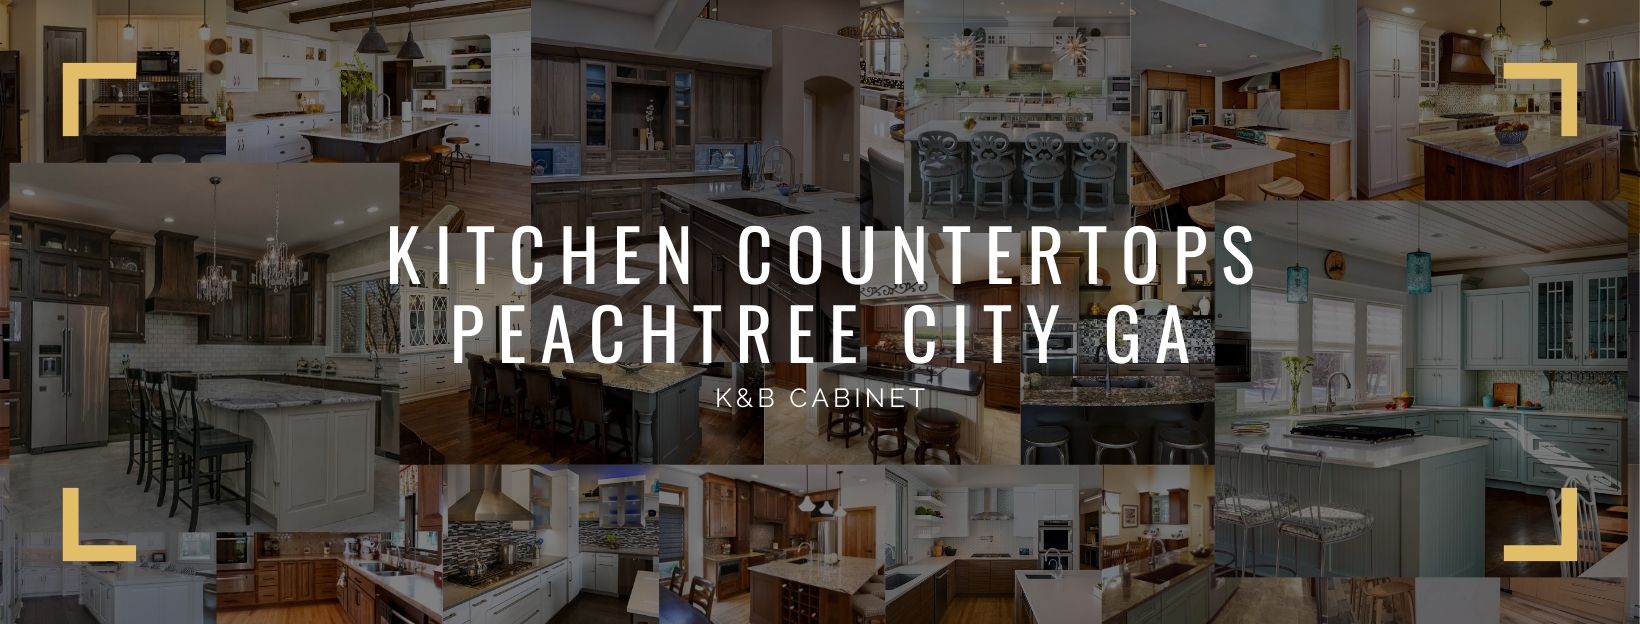 Kitchen Countertops Peachtree City GA